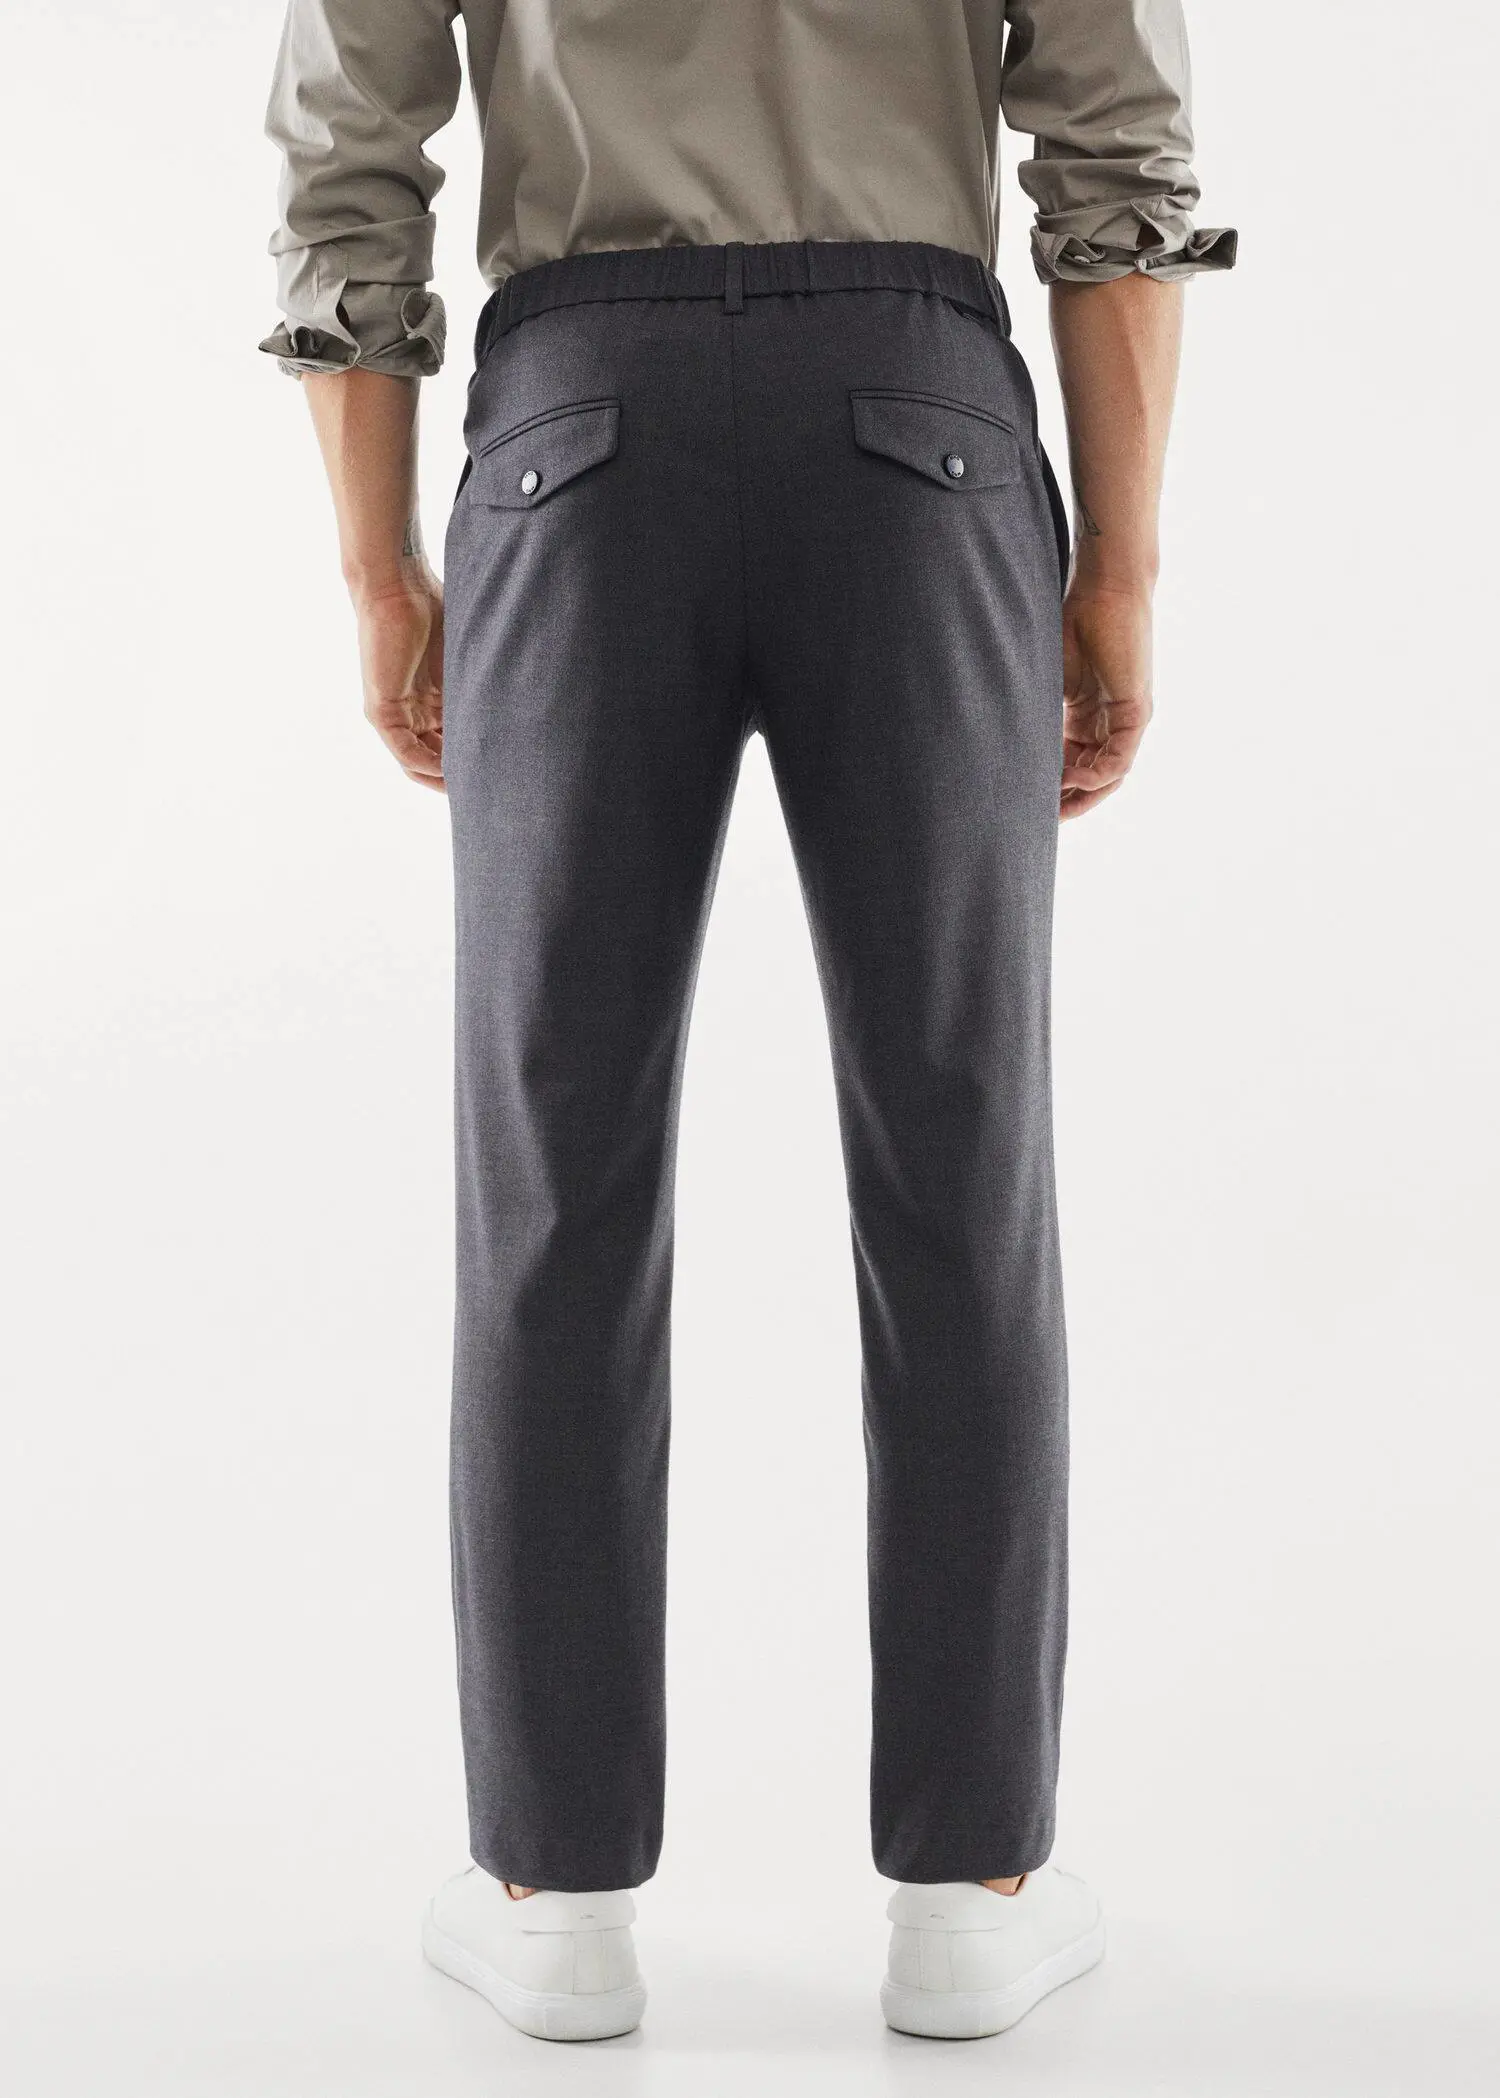 Mango Slim fit technical fabric trousers. 3